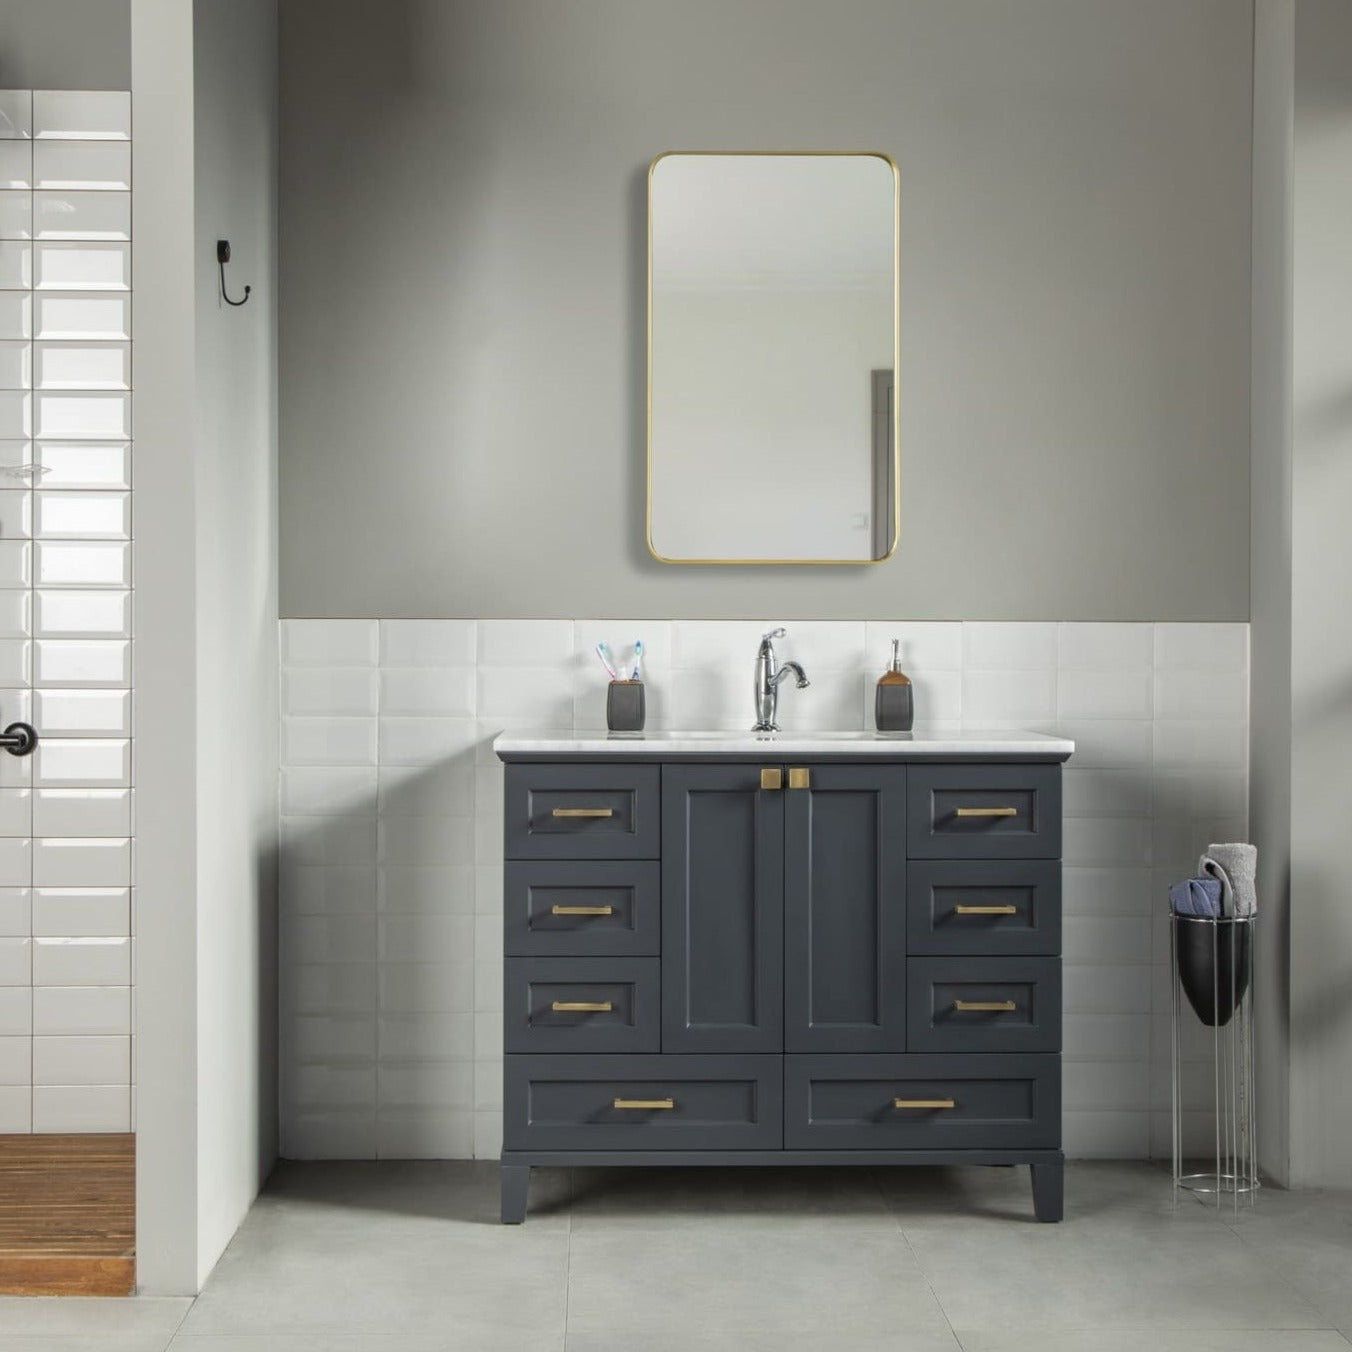 Paloma Bathroom Cabinets  Homelero 42"  #size_42"  #color_dark grey  #hardware_brass